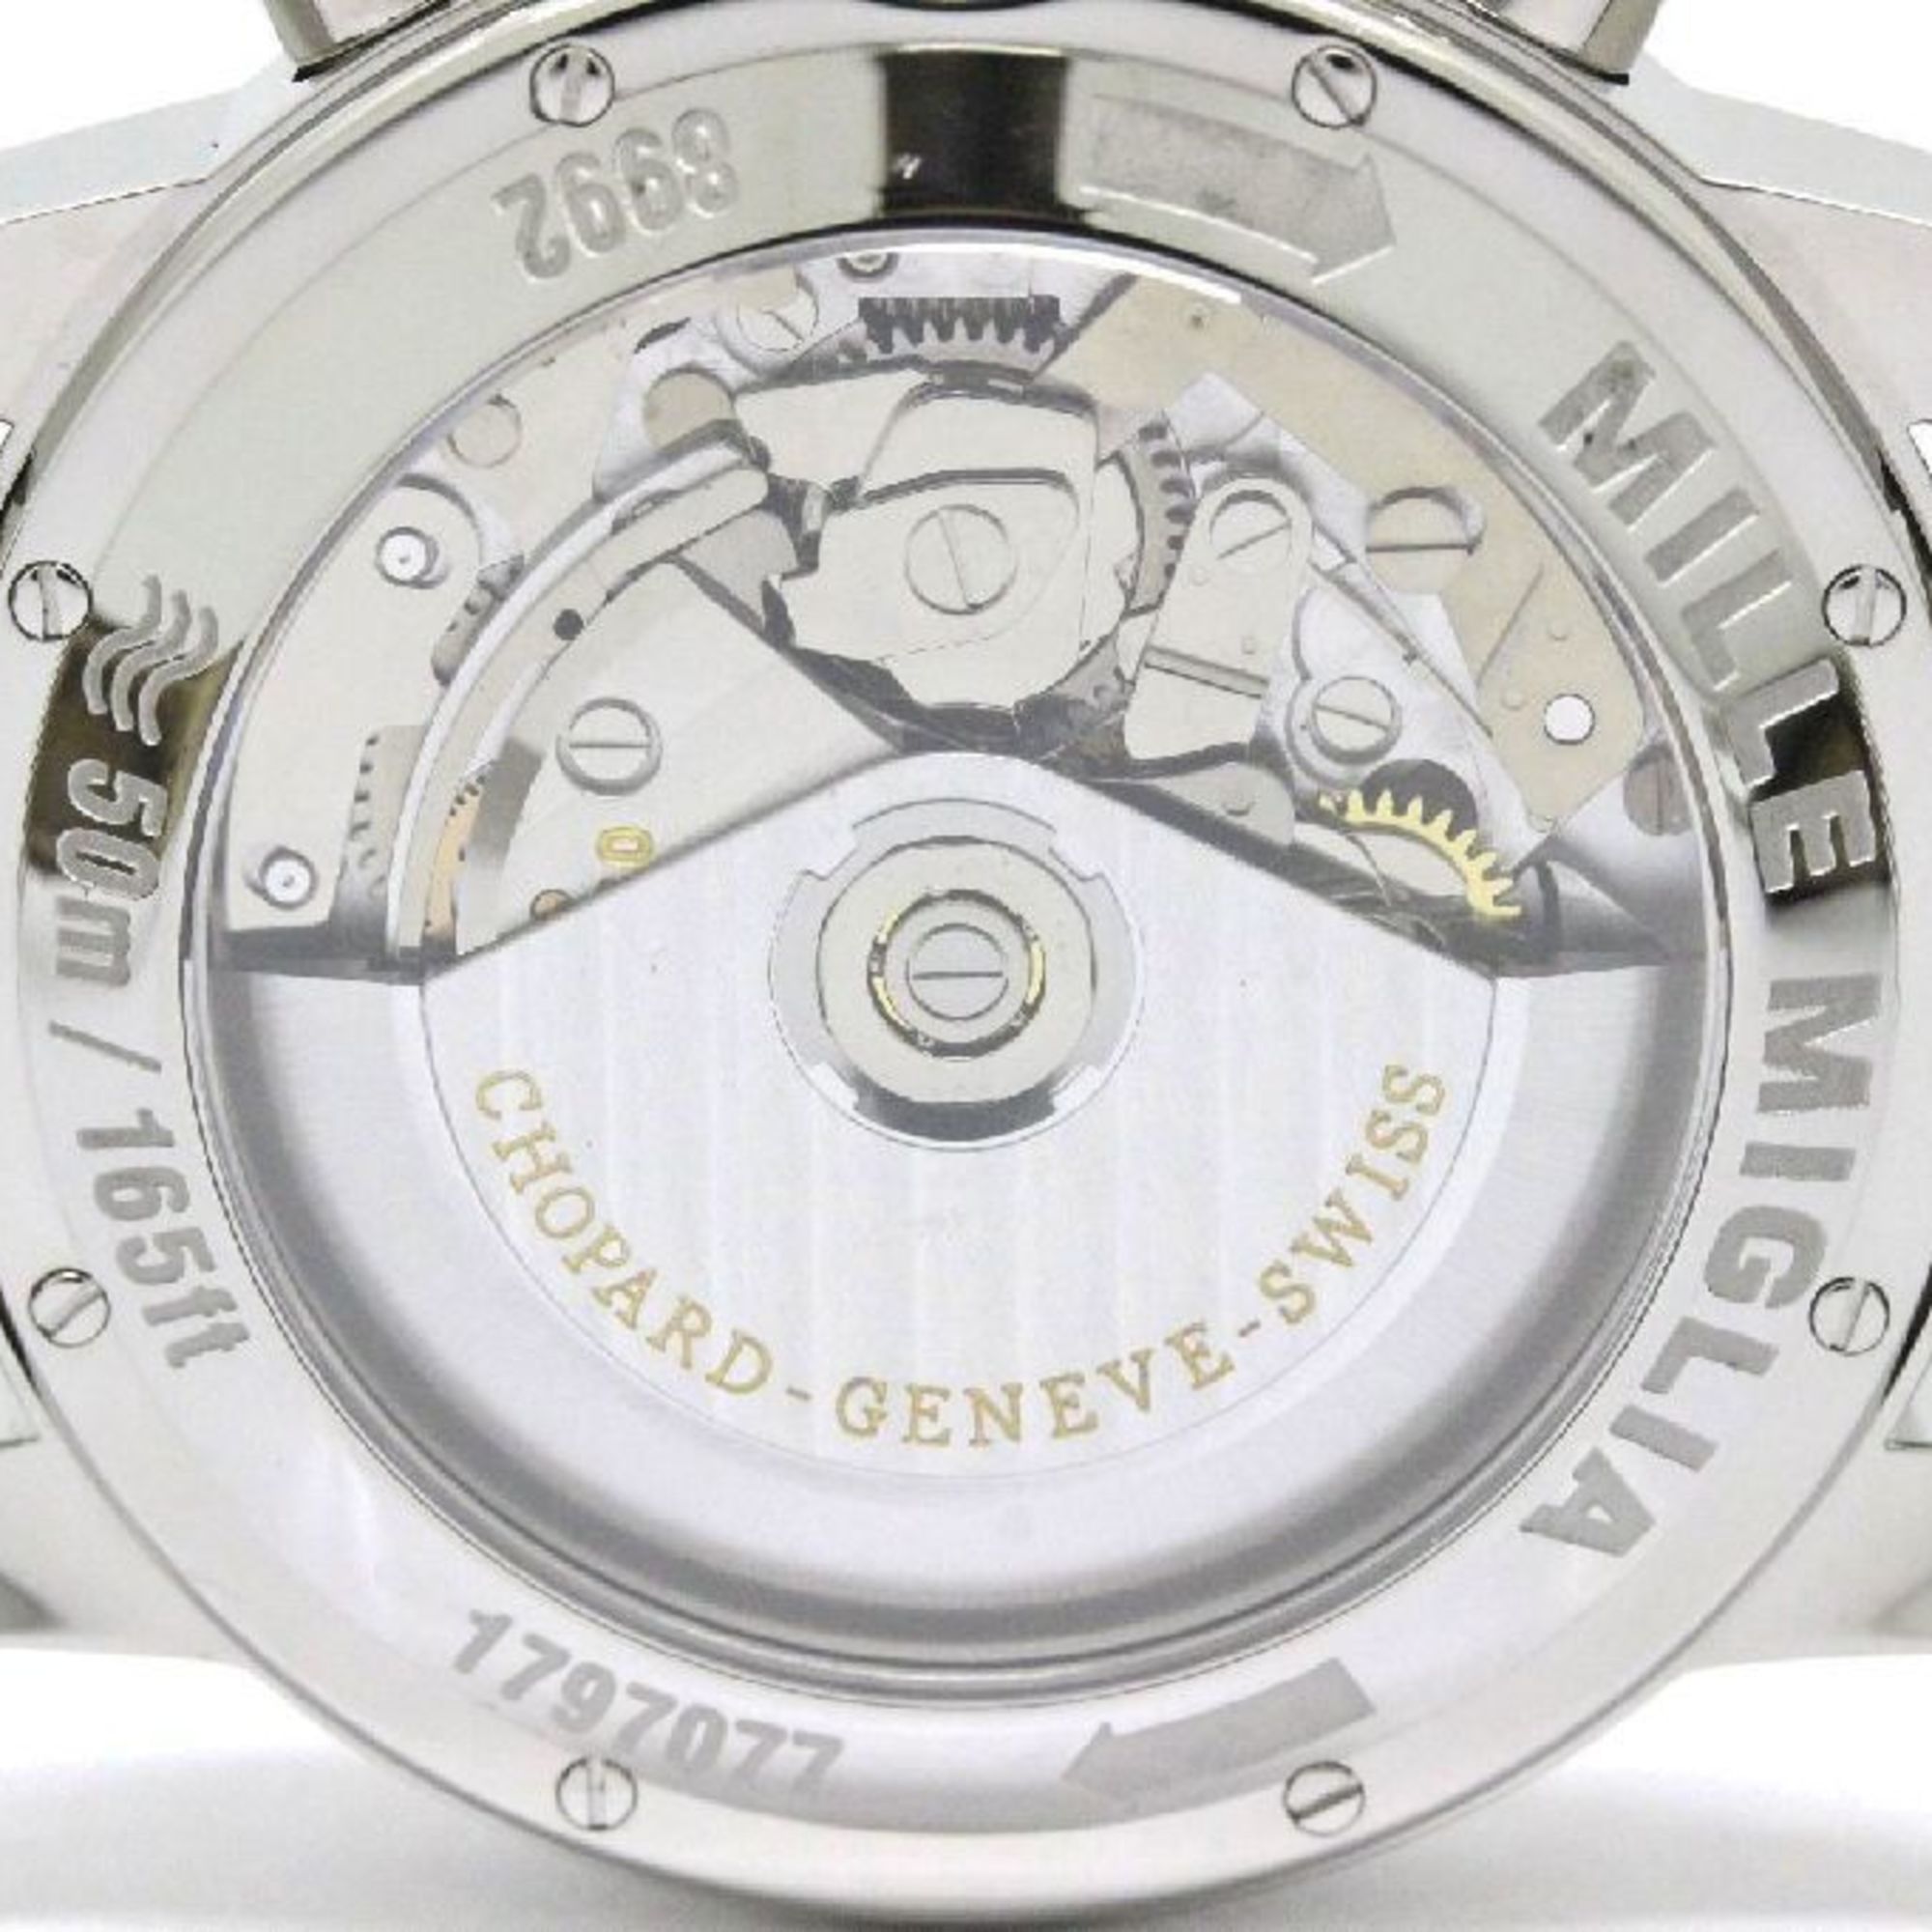 CHOPARD Mille Miglia Chronograph GMT Mens Watch 16/8992 3001